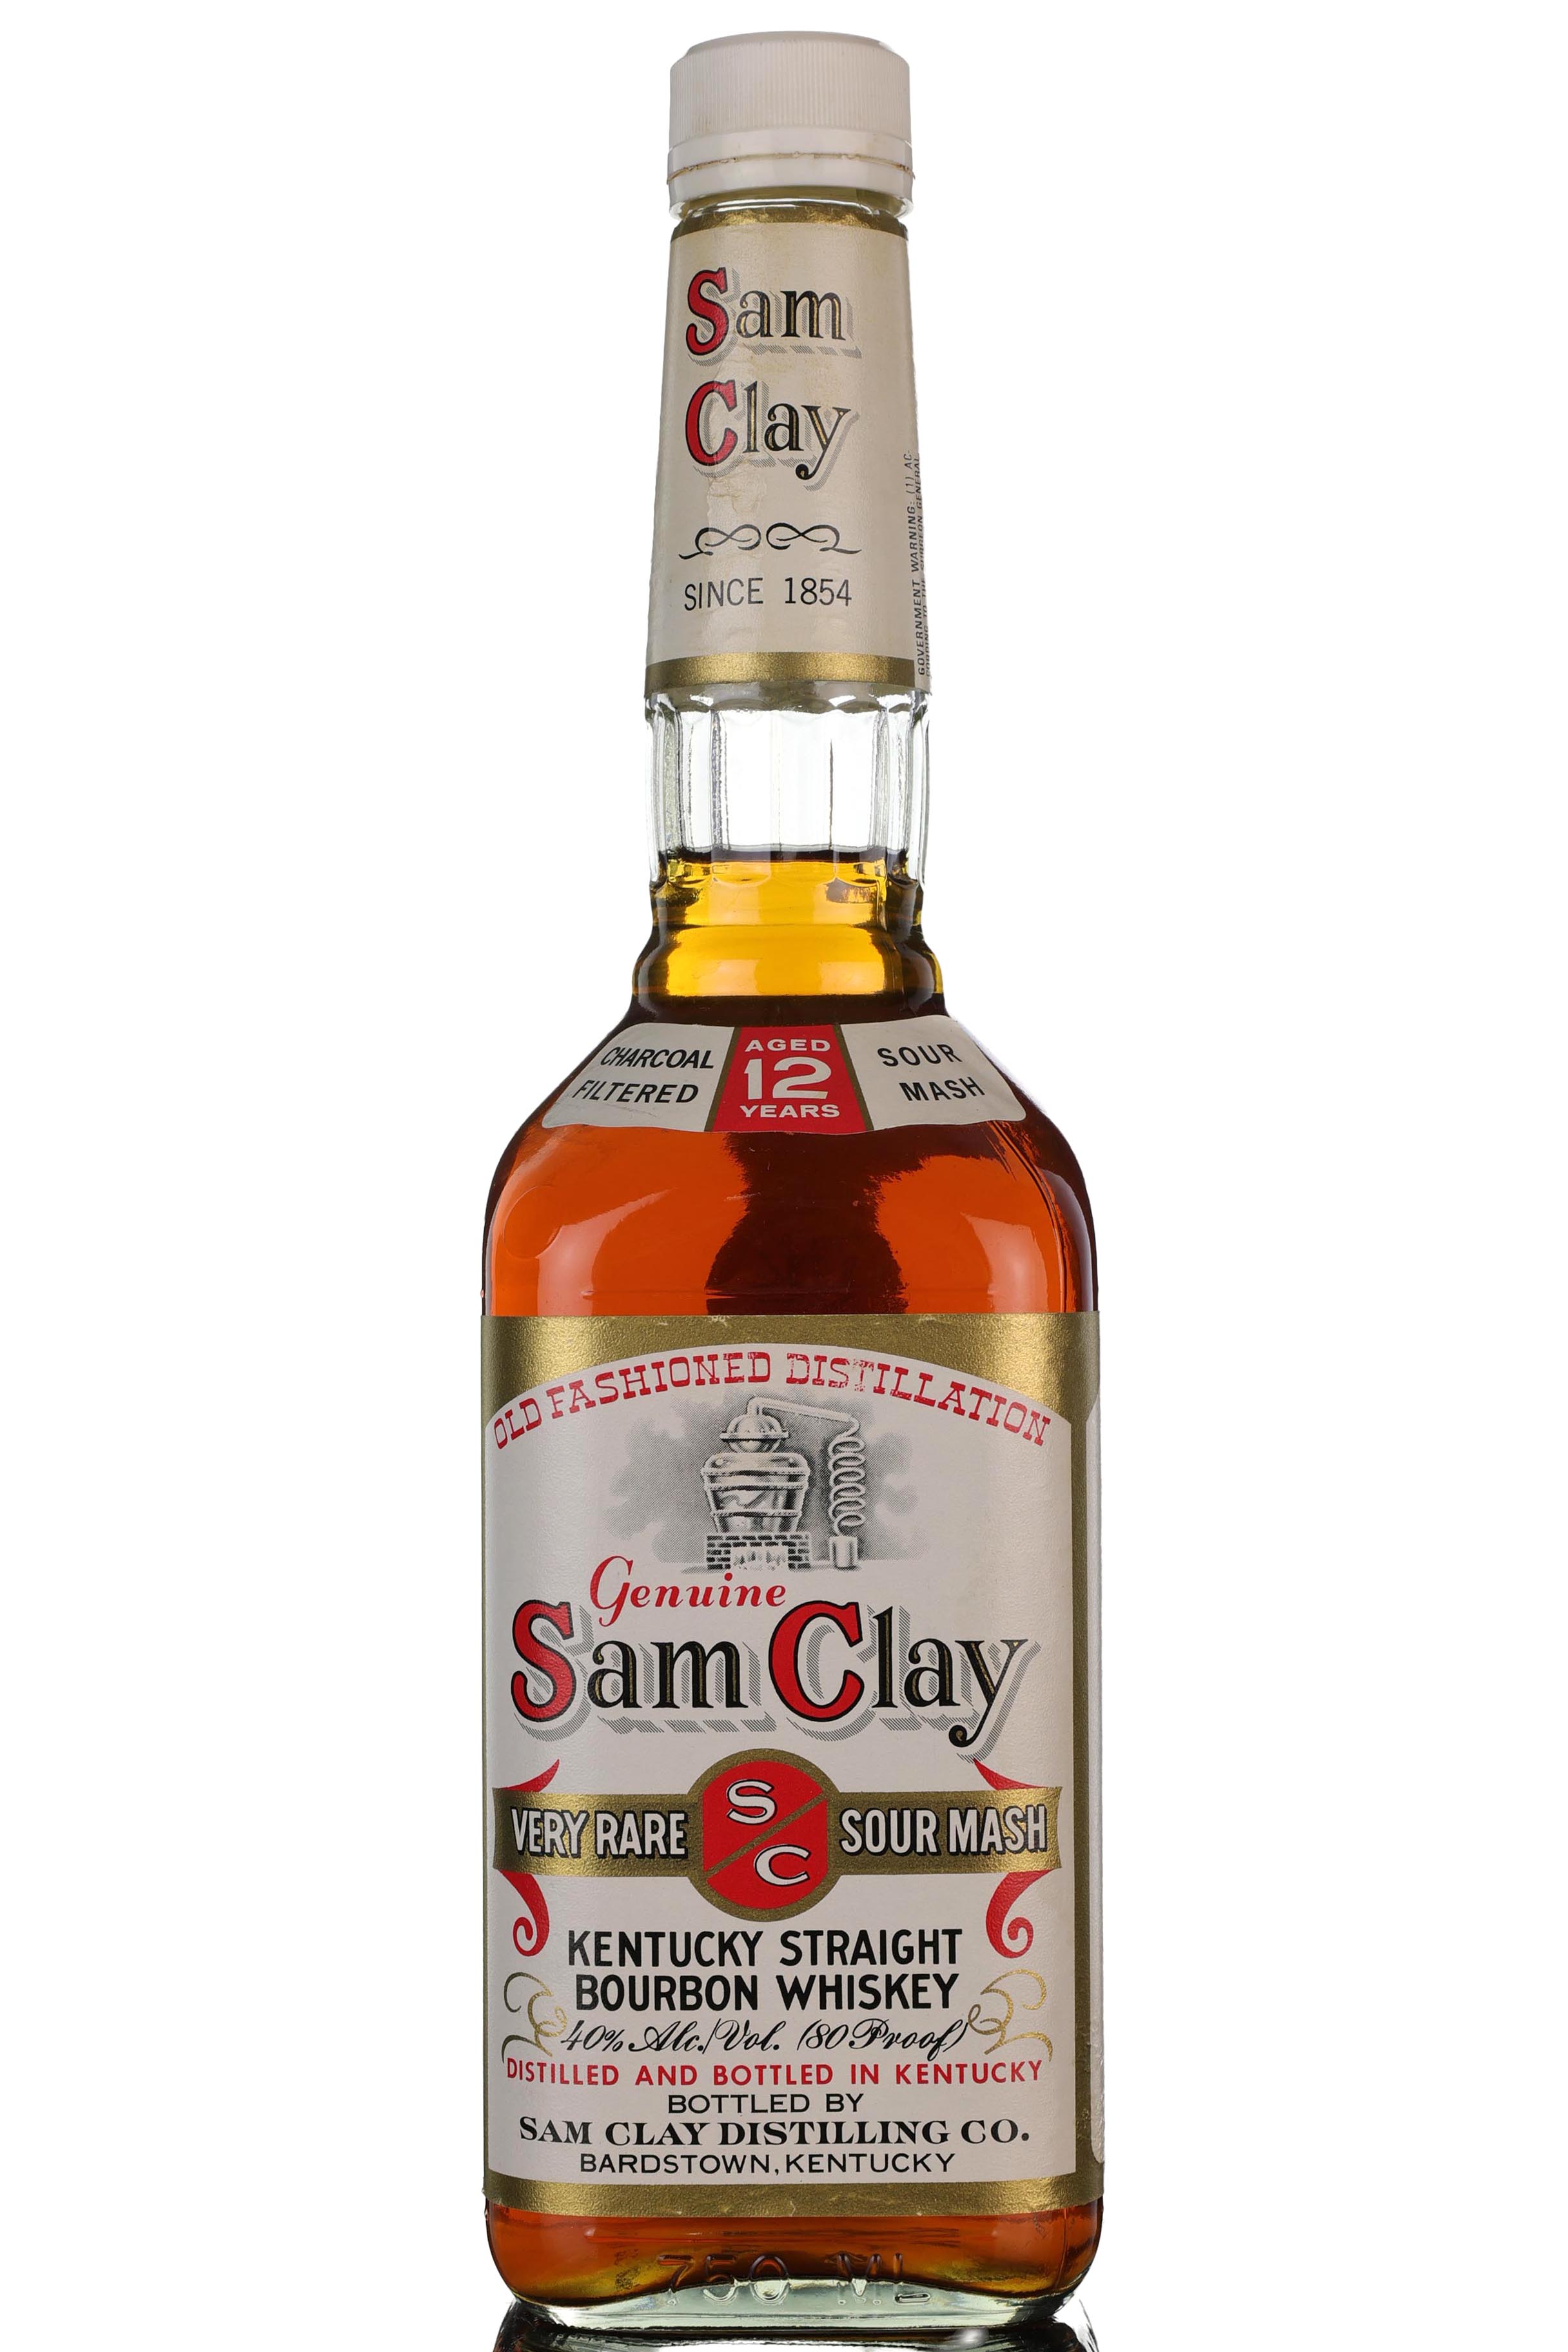 Sam Clay 12 Year Old Bourbon